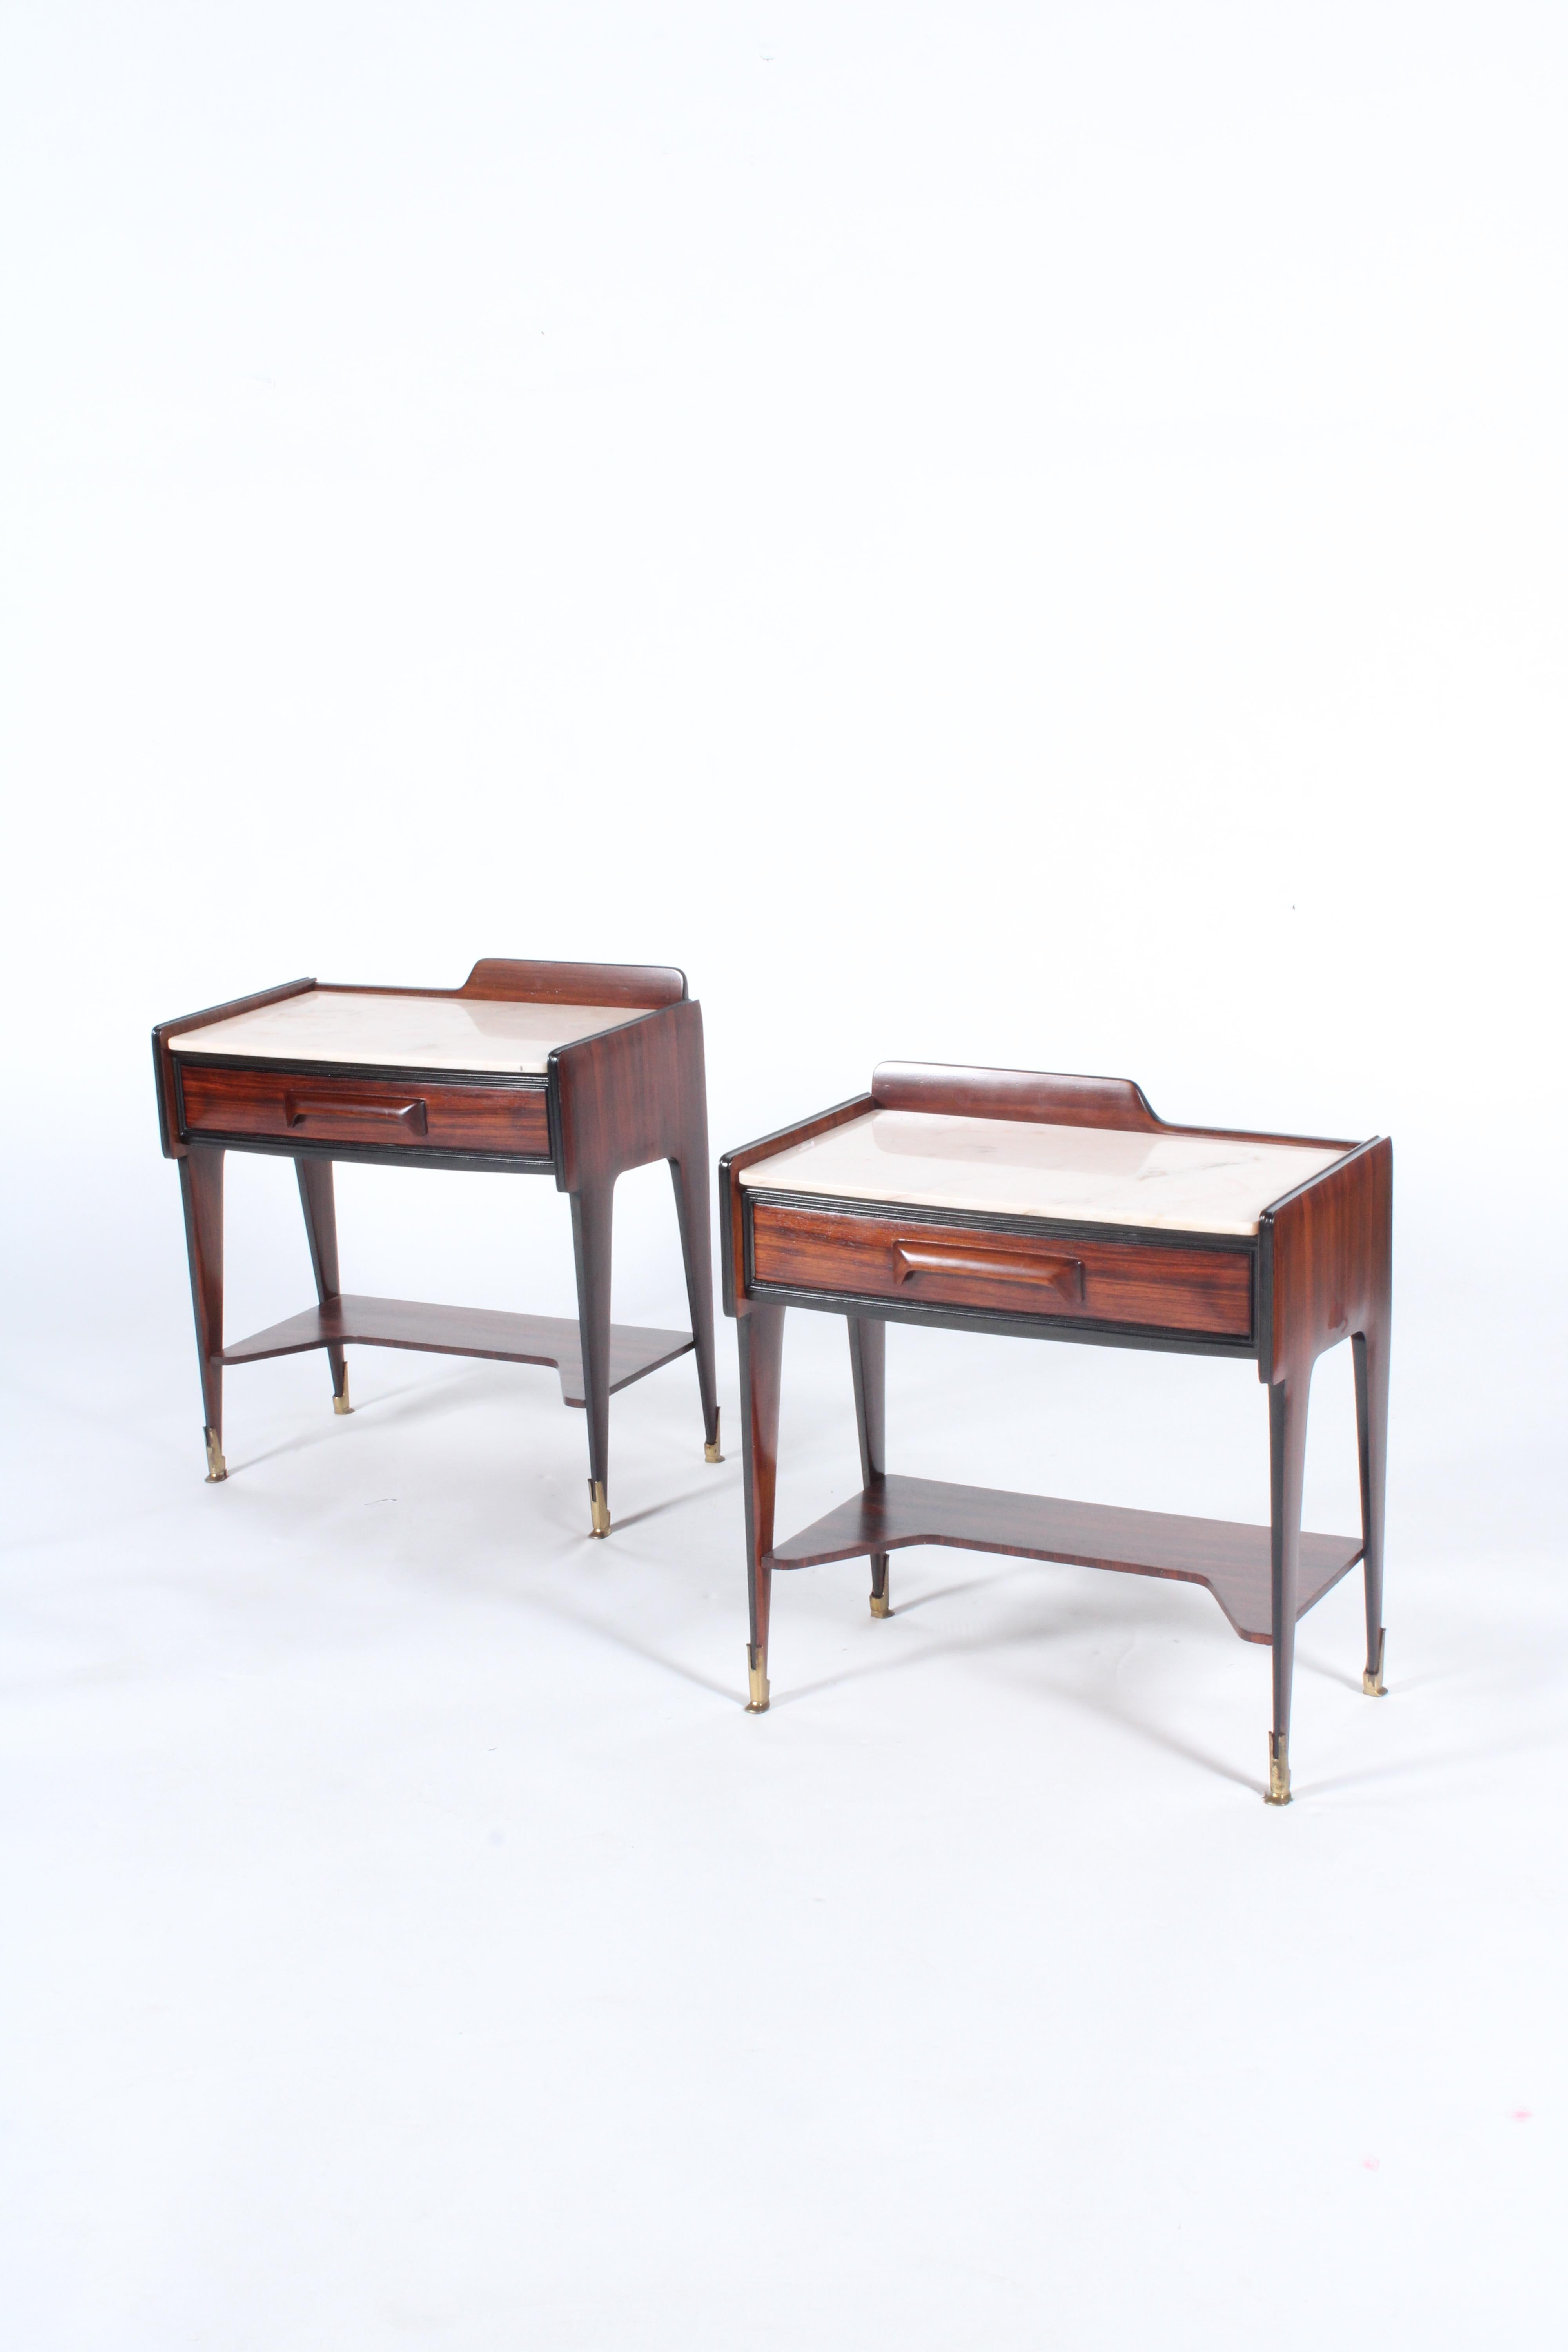 Woodwork Exquisite pair of mid century Italian nightstands *Free International Delivery